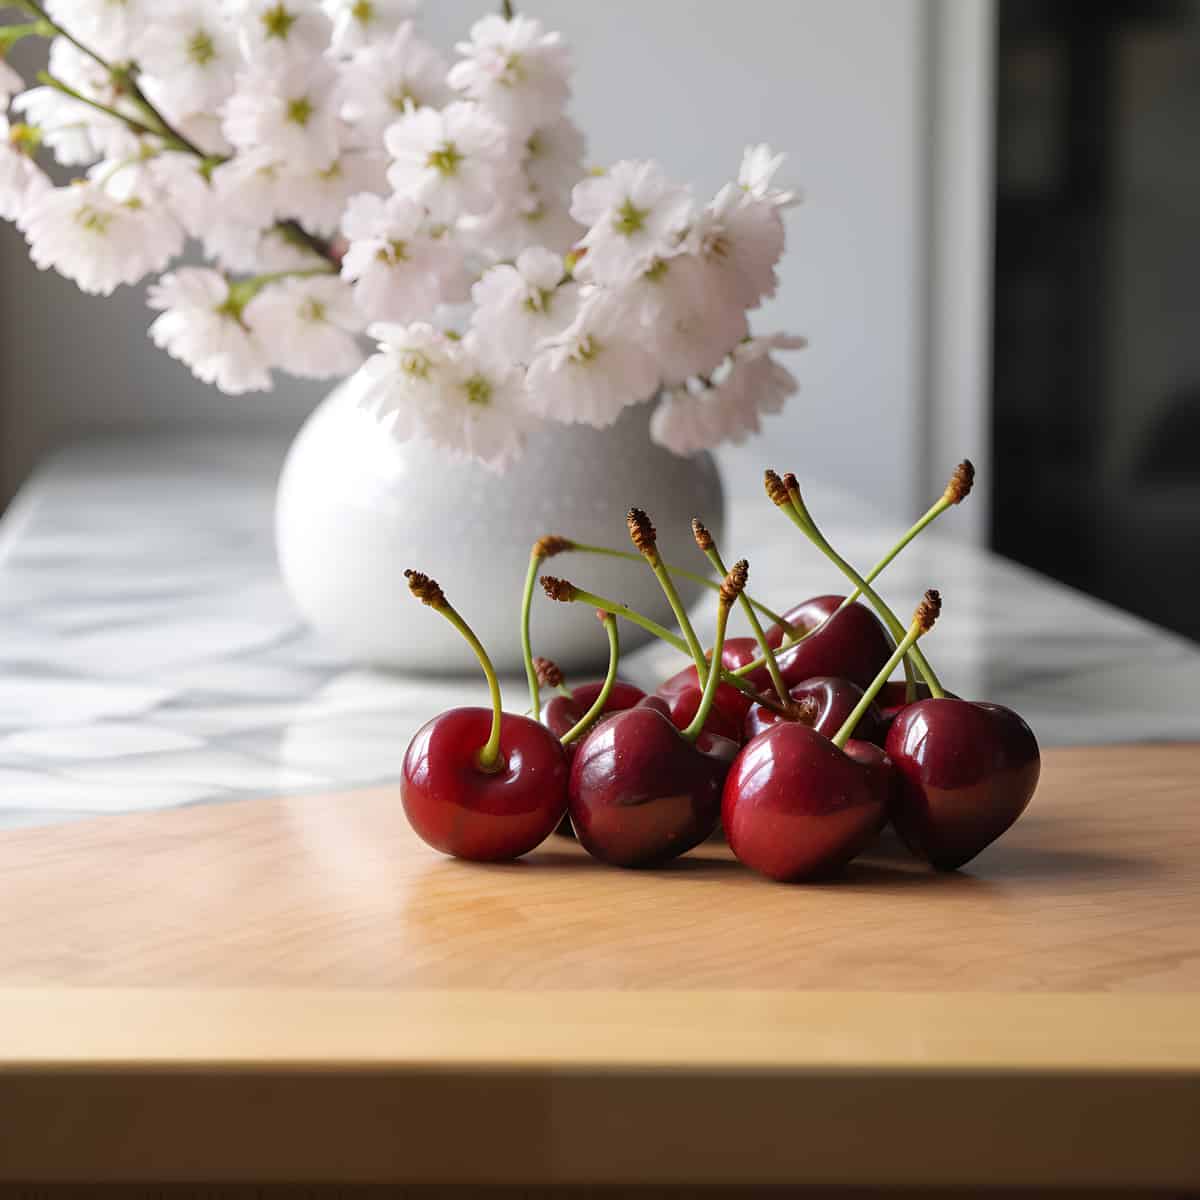 Yoshino Cherries on a kitchen counter